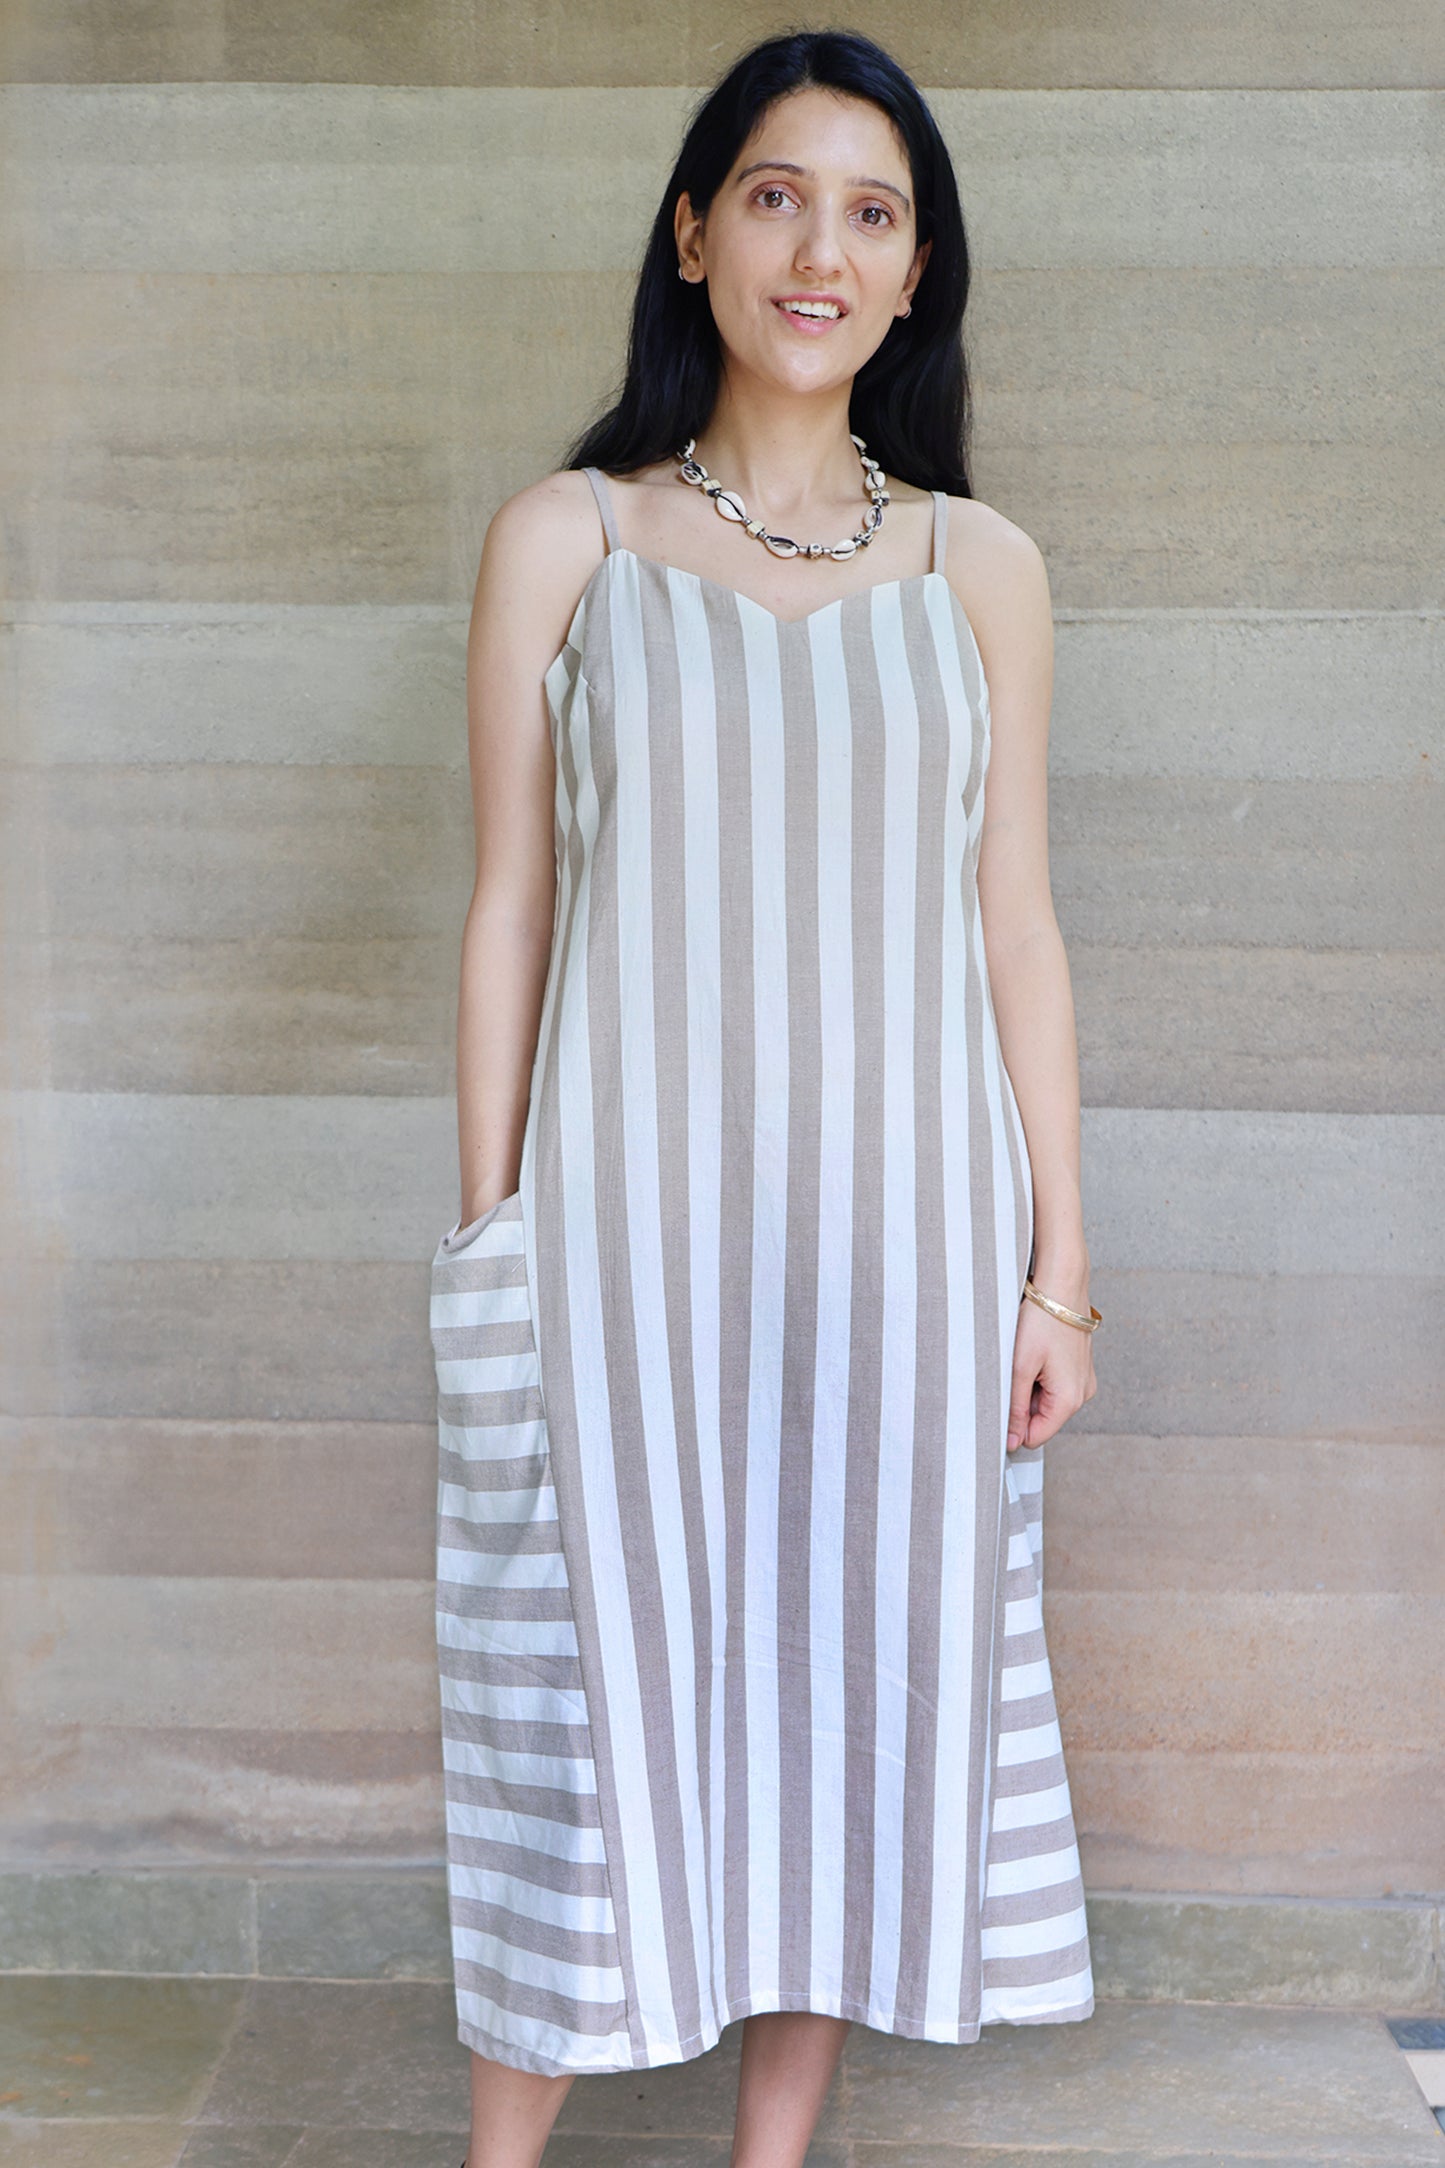 Off white and Light Brown Striped Godet Dress